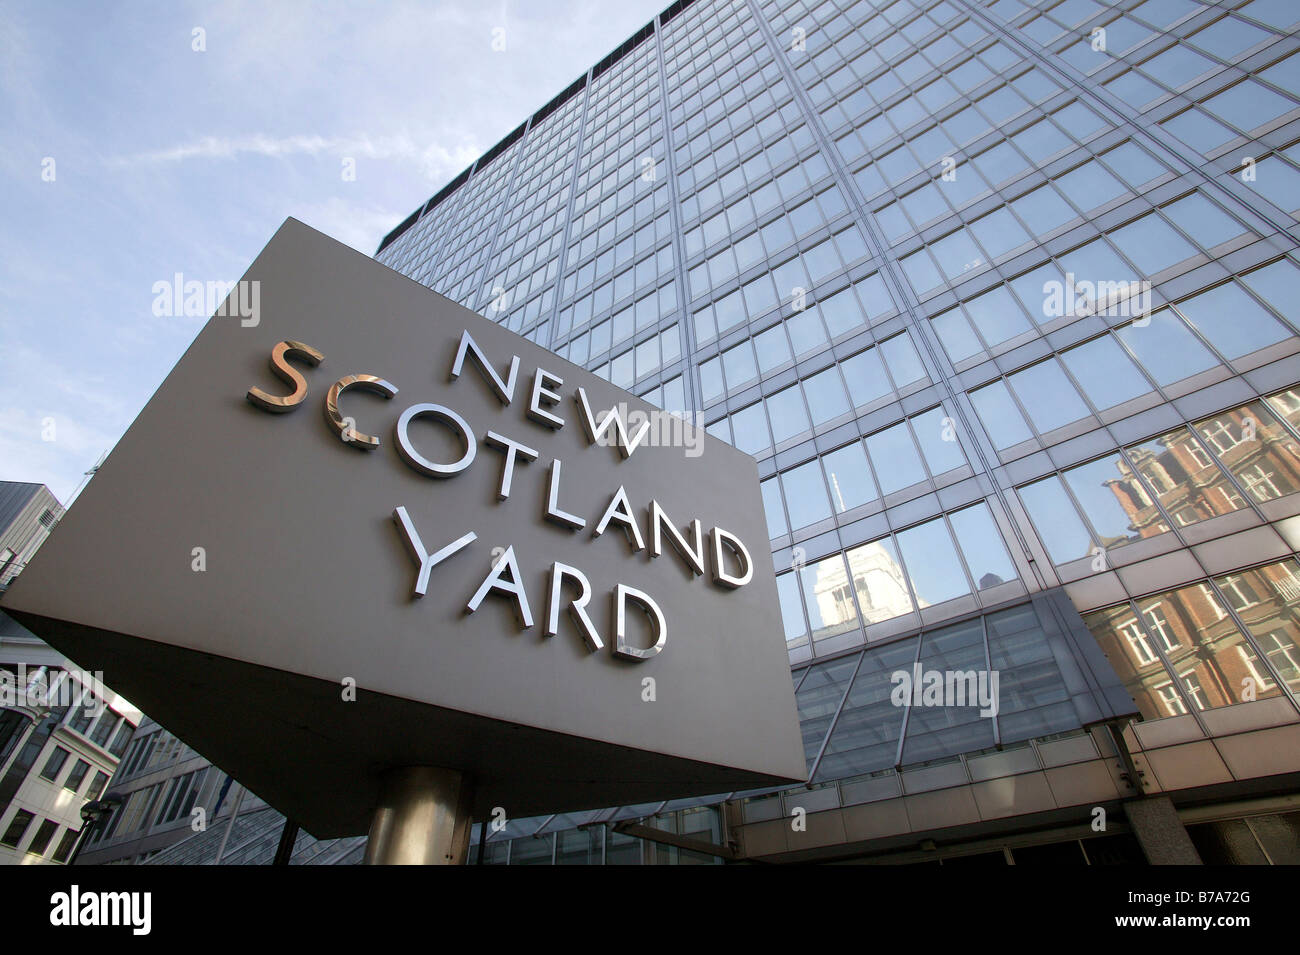 The New Scotland Yard headquarters on the Victoria Embankment in London,  England United Kingdom UK Stock Photo - Alamy